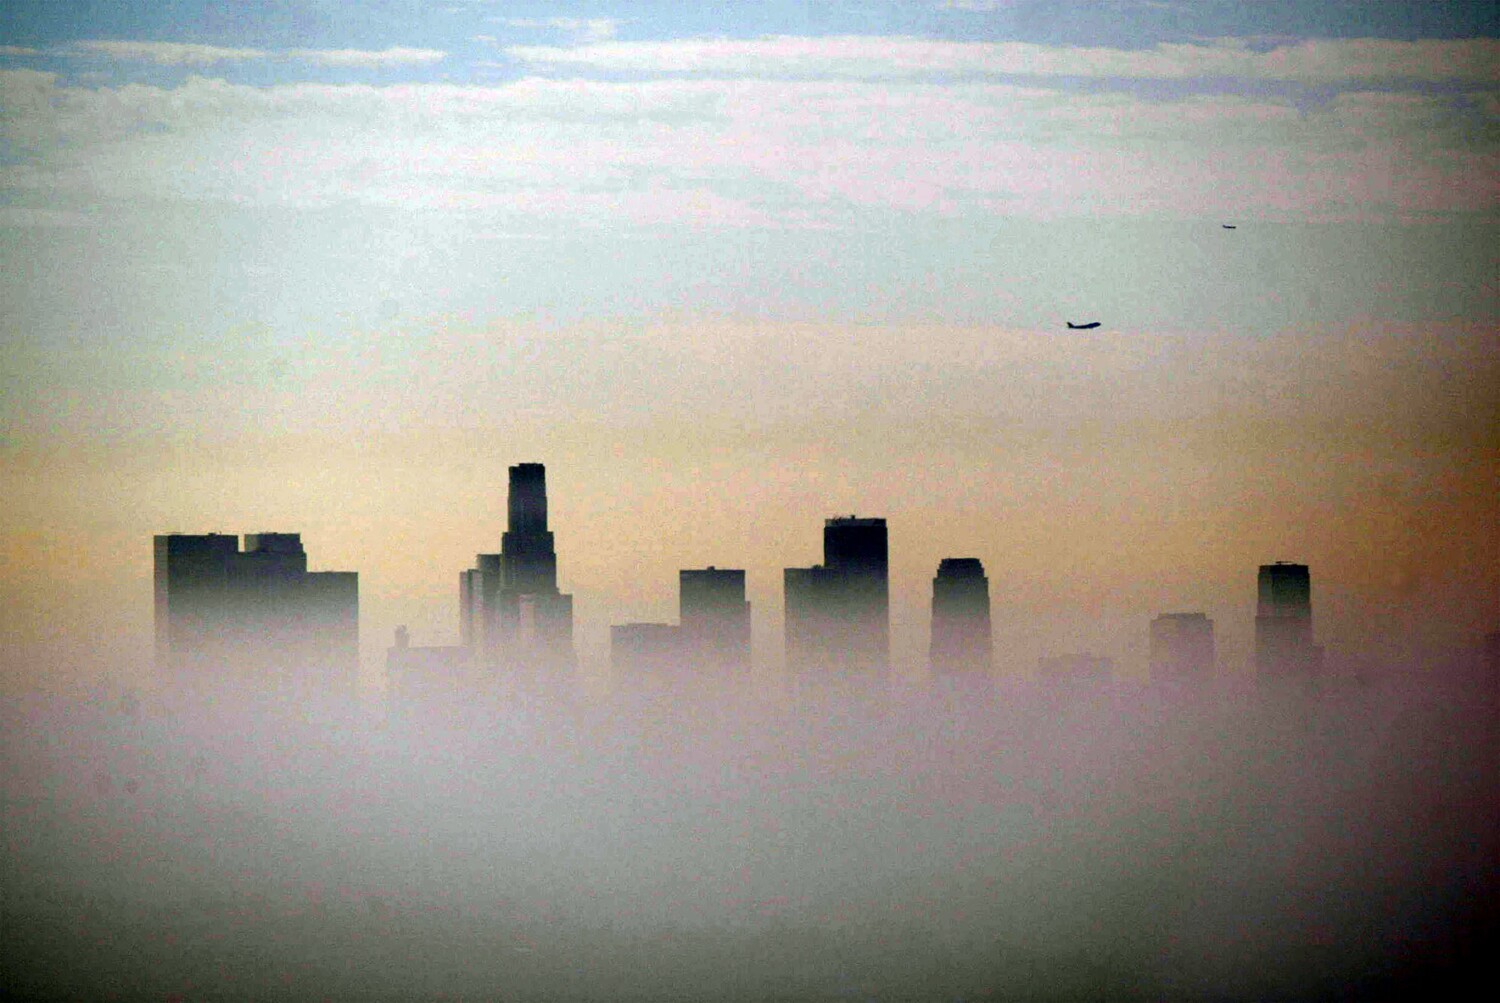 Southland air regulators threaten to sue EPA over smog